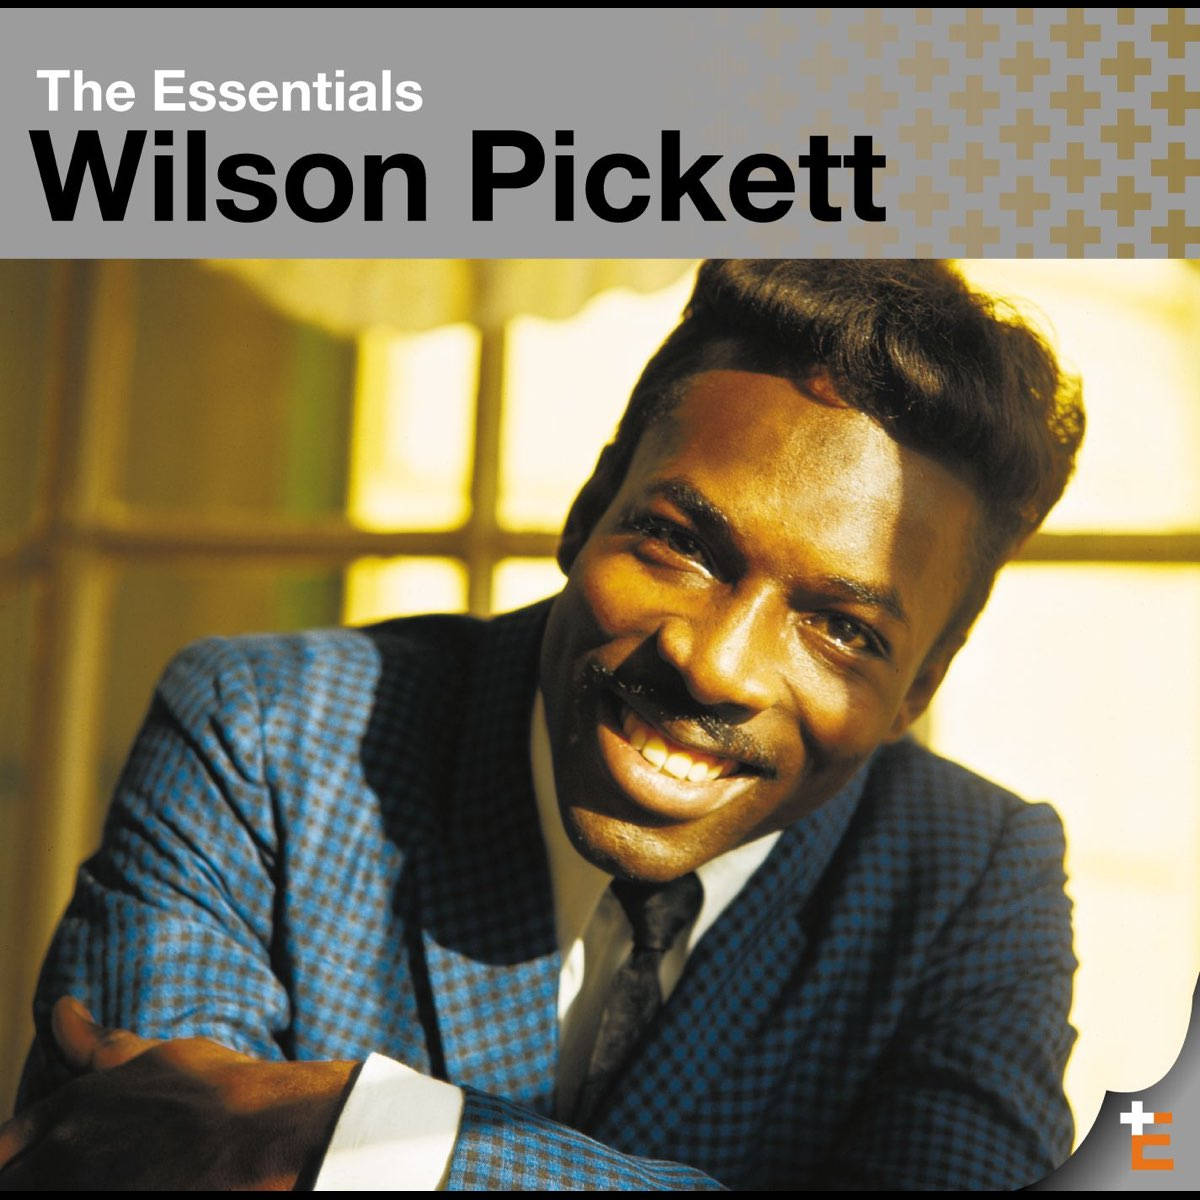 American Musician Wilson Pickett The Essentials Wallpaper